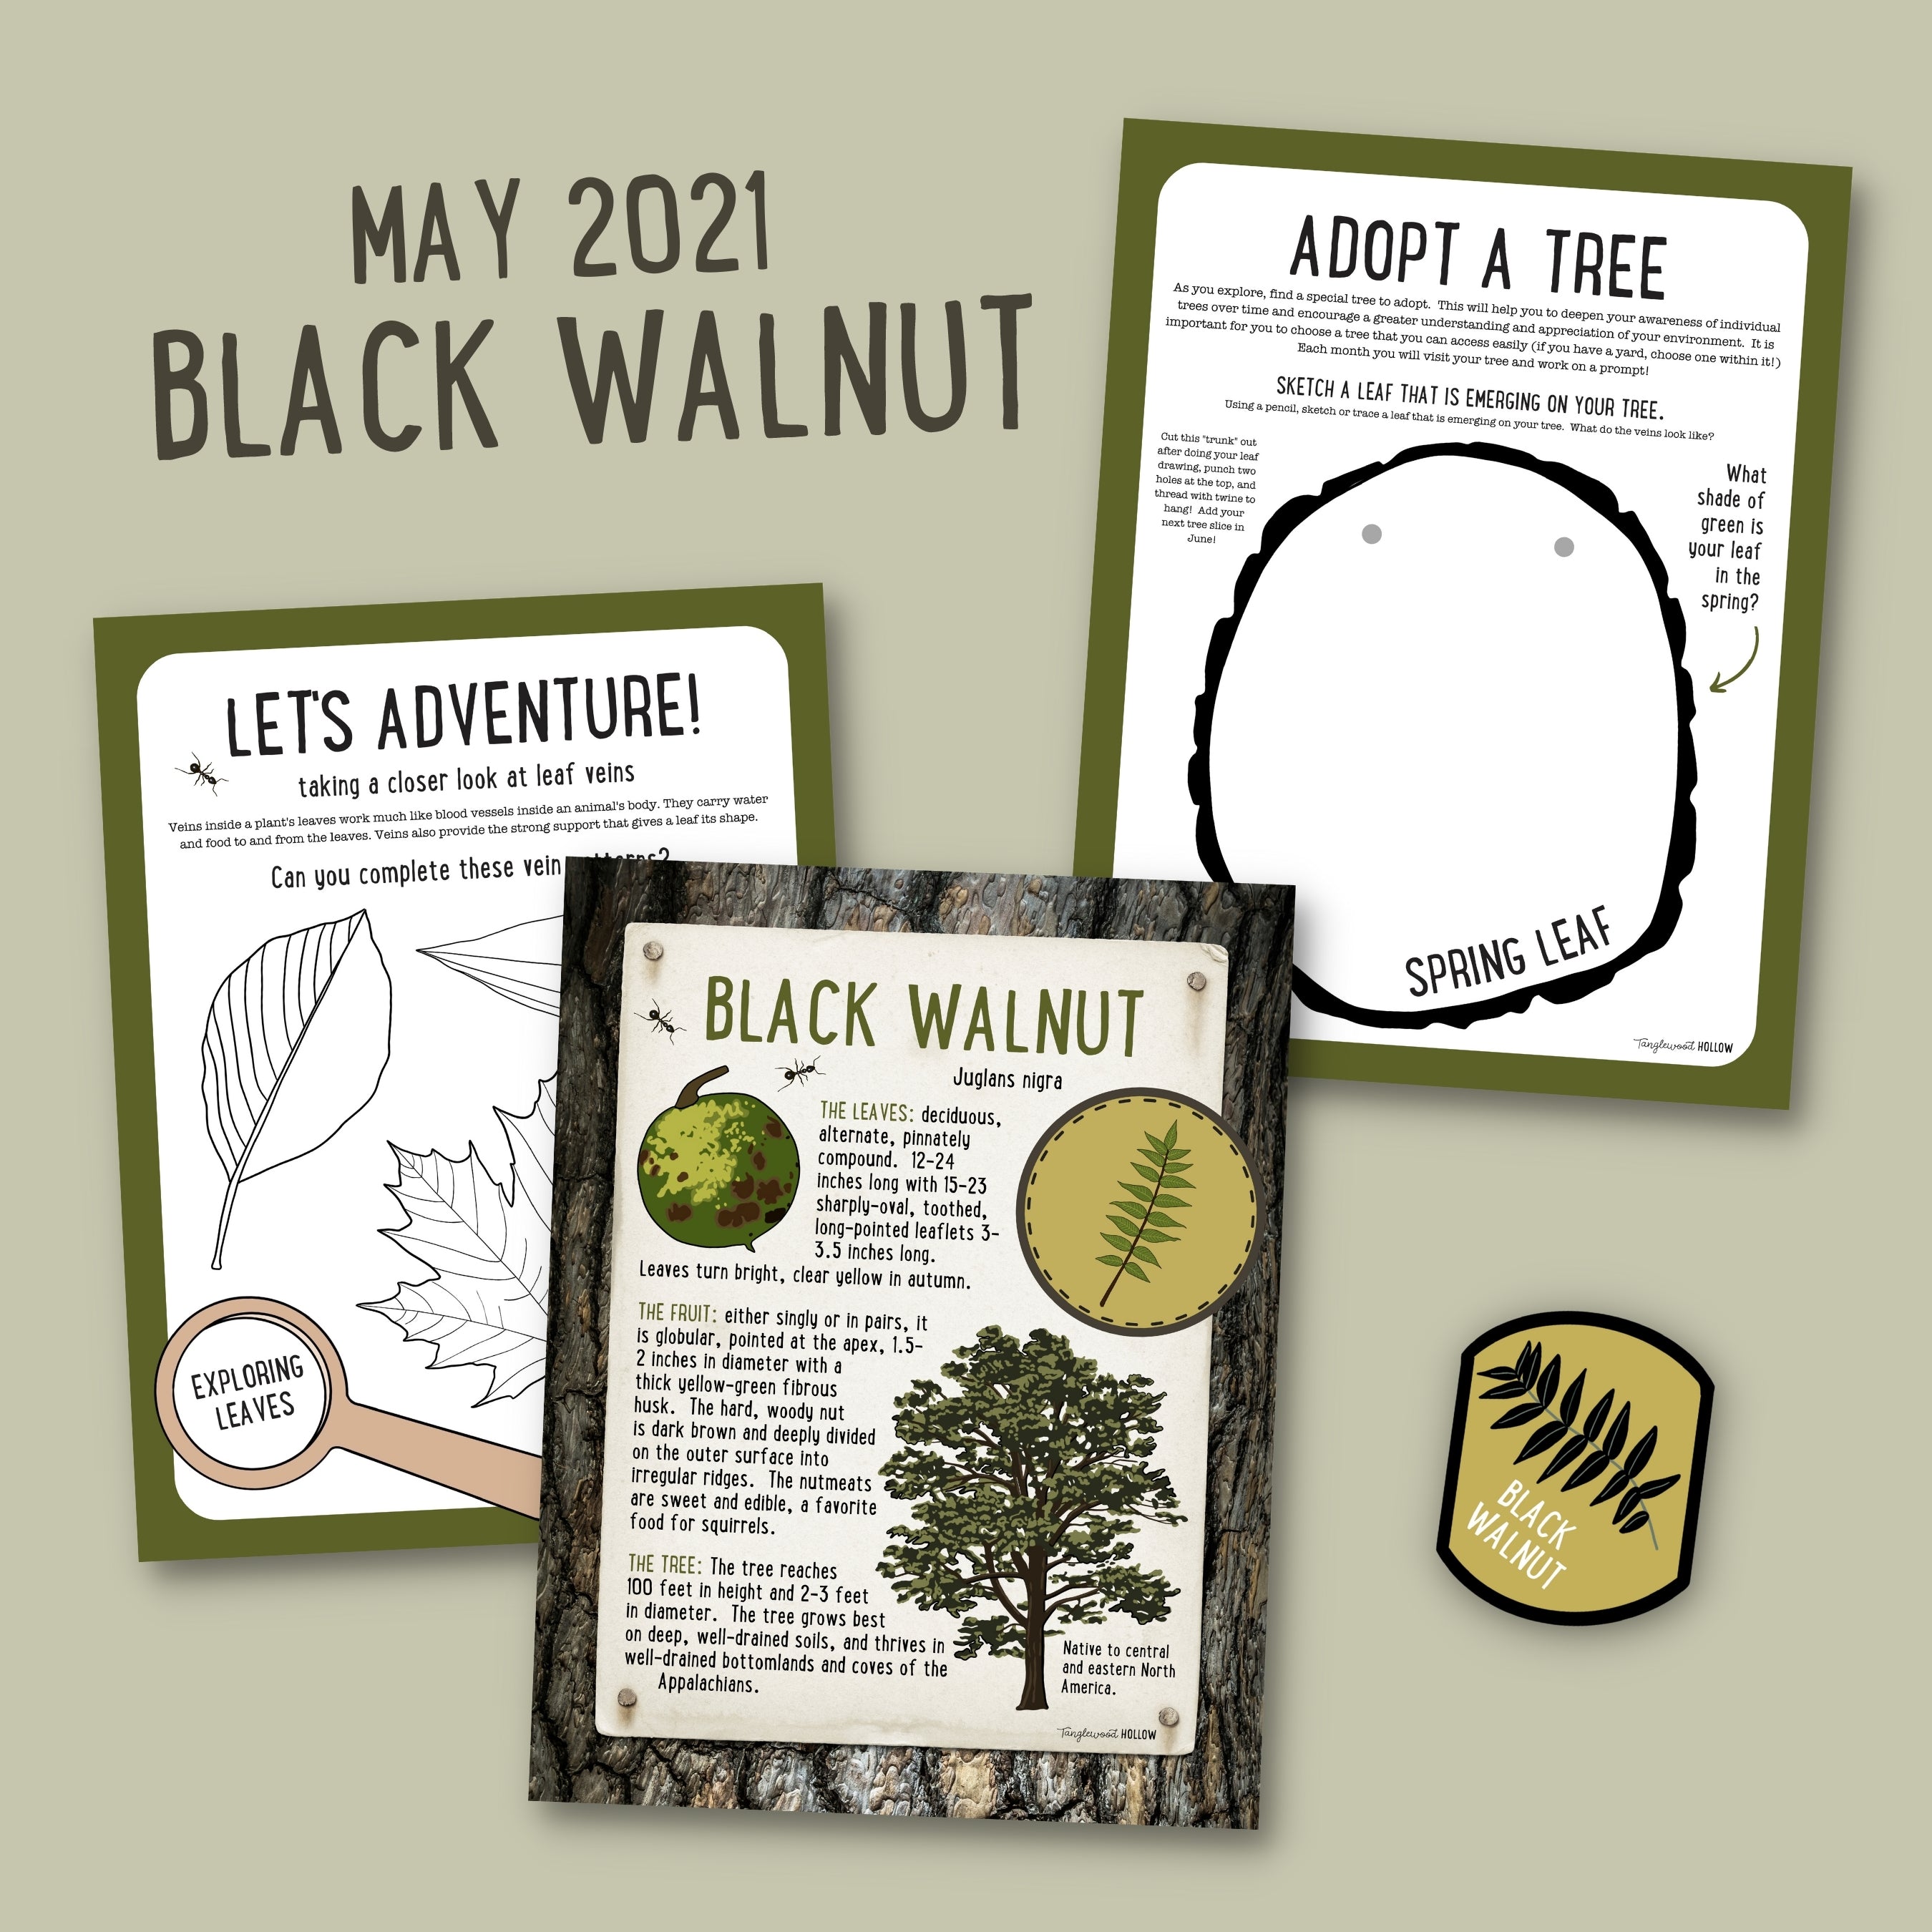 Exploring Black Walnut - A Digital Guide